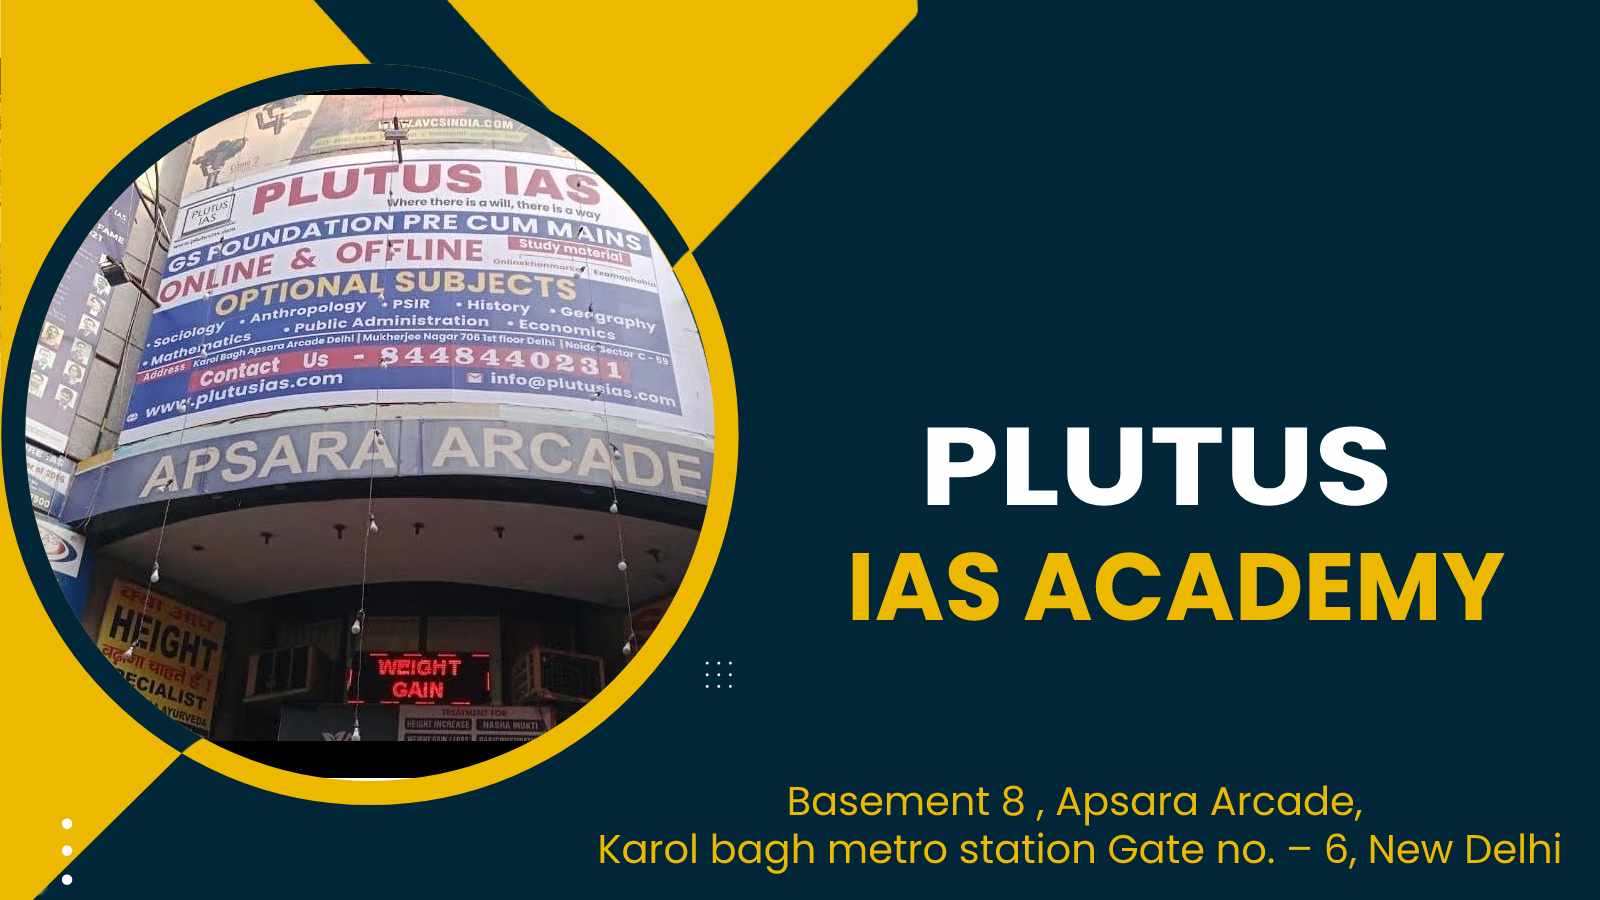 PLUTUS IAS Academy Delhi